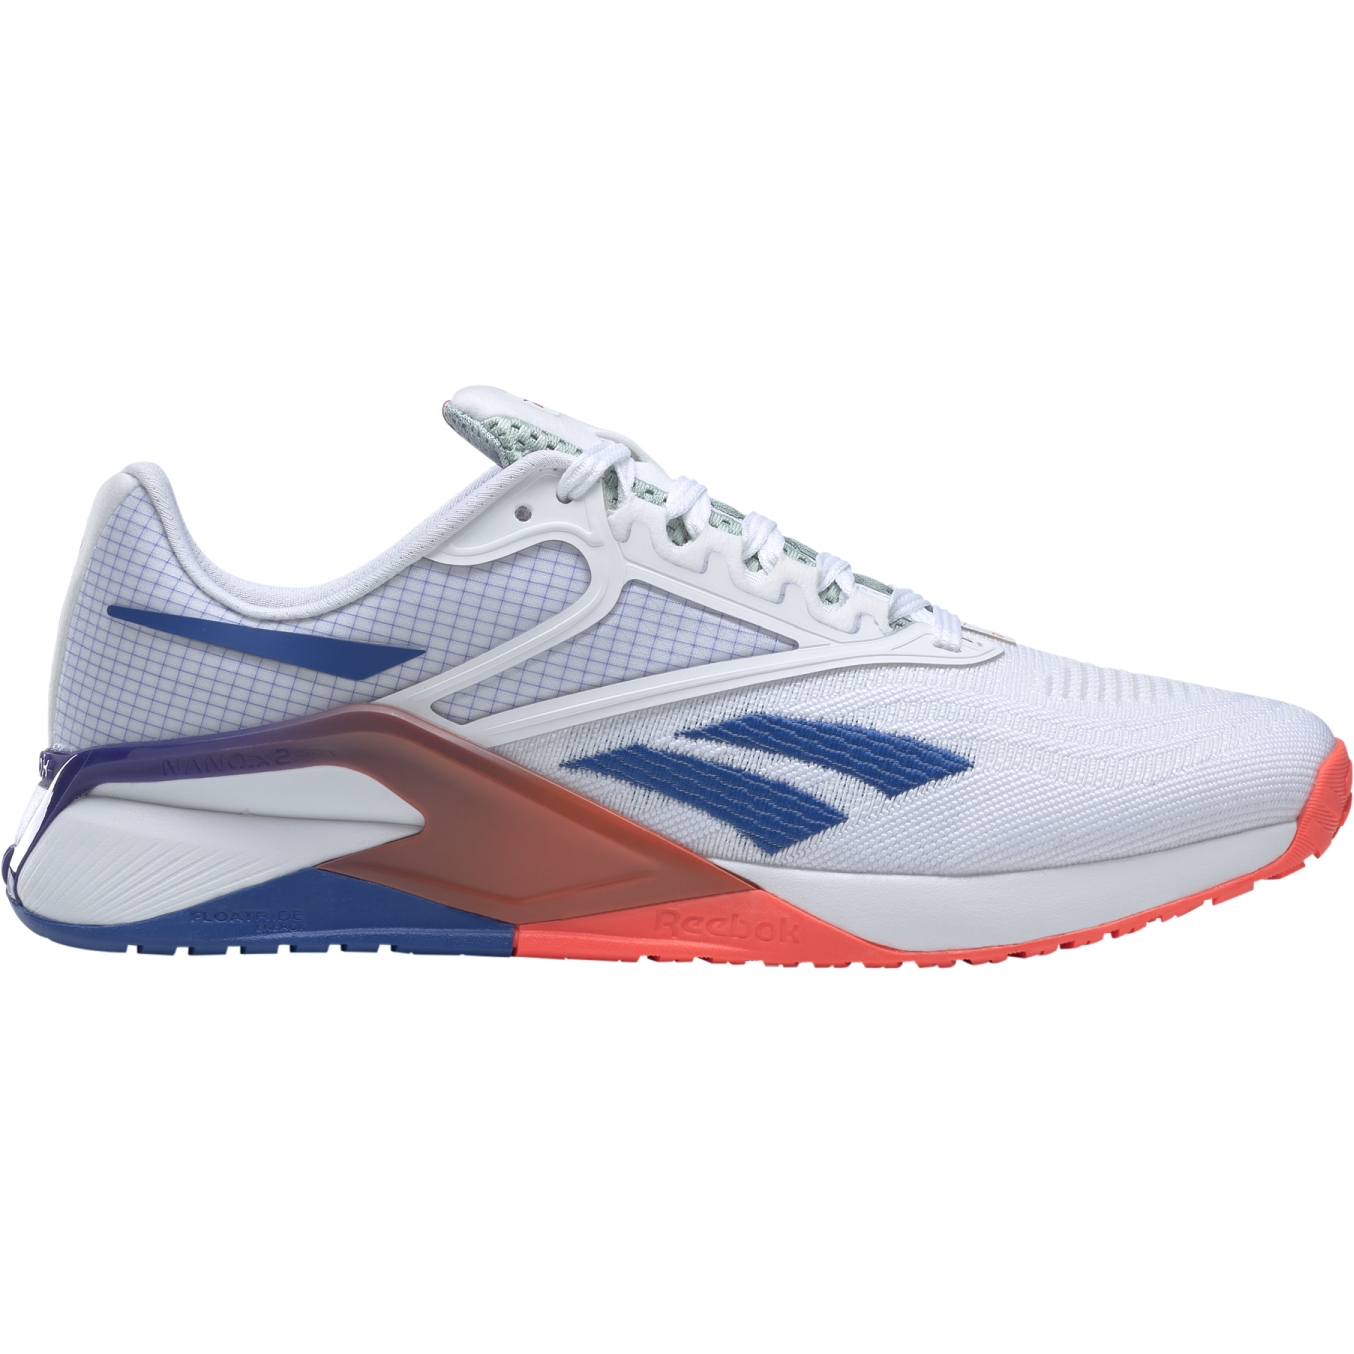 Productfoto van Reebok Nano X2 Men&#039;s Fitness Shoes - ftwr white/vector blue/orange flare